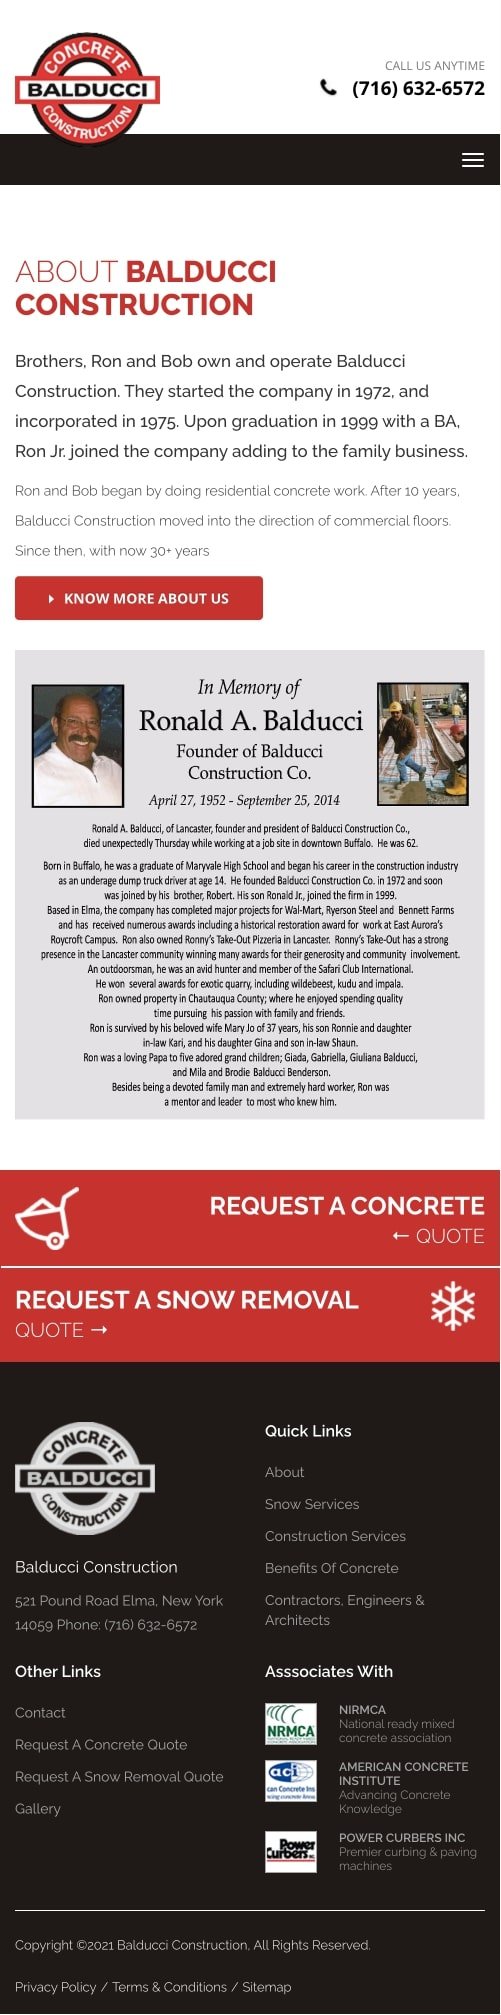 Balducci Construction Website - Mobile